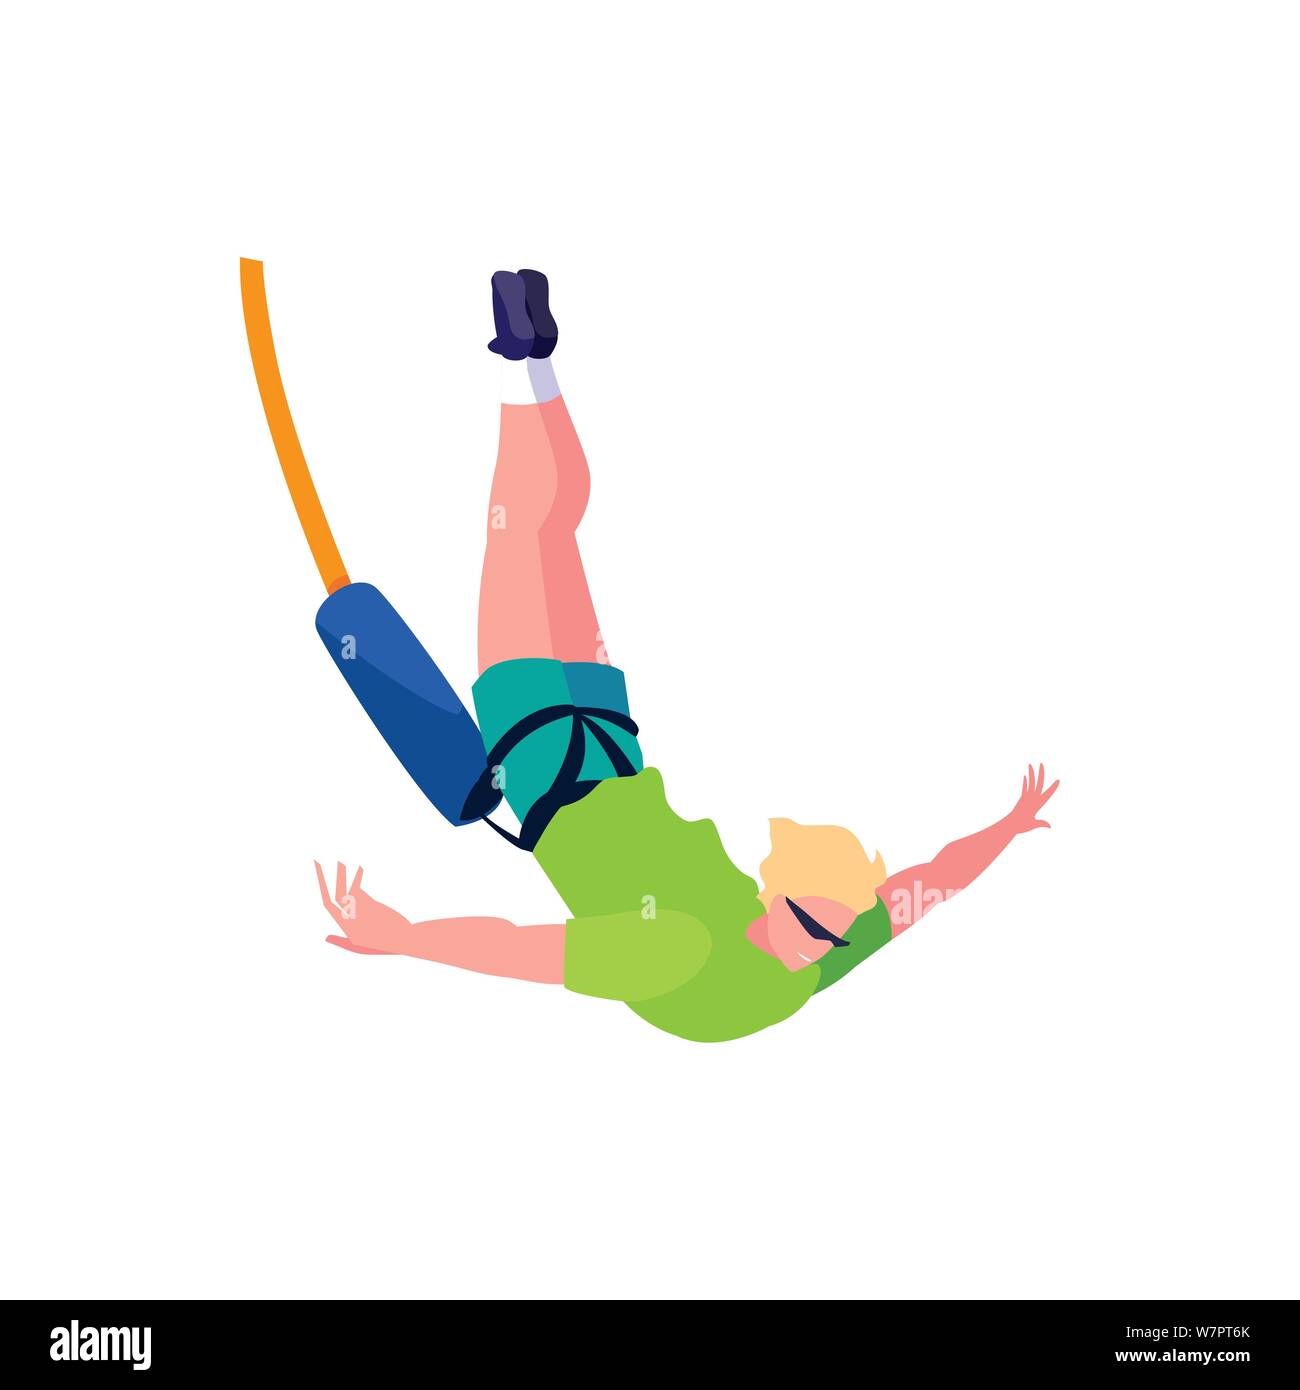 Mann mit bungee jumping Seil extreme Sport und Lifestyle Vector  Illustration Stock-Vektorgrafik - Alamy